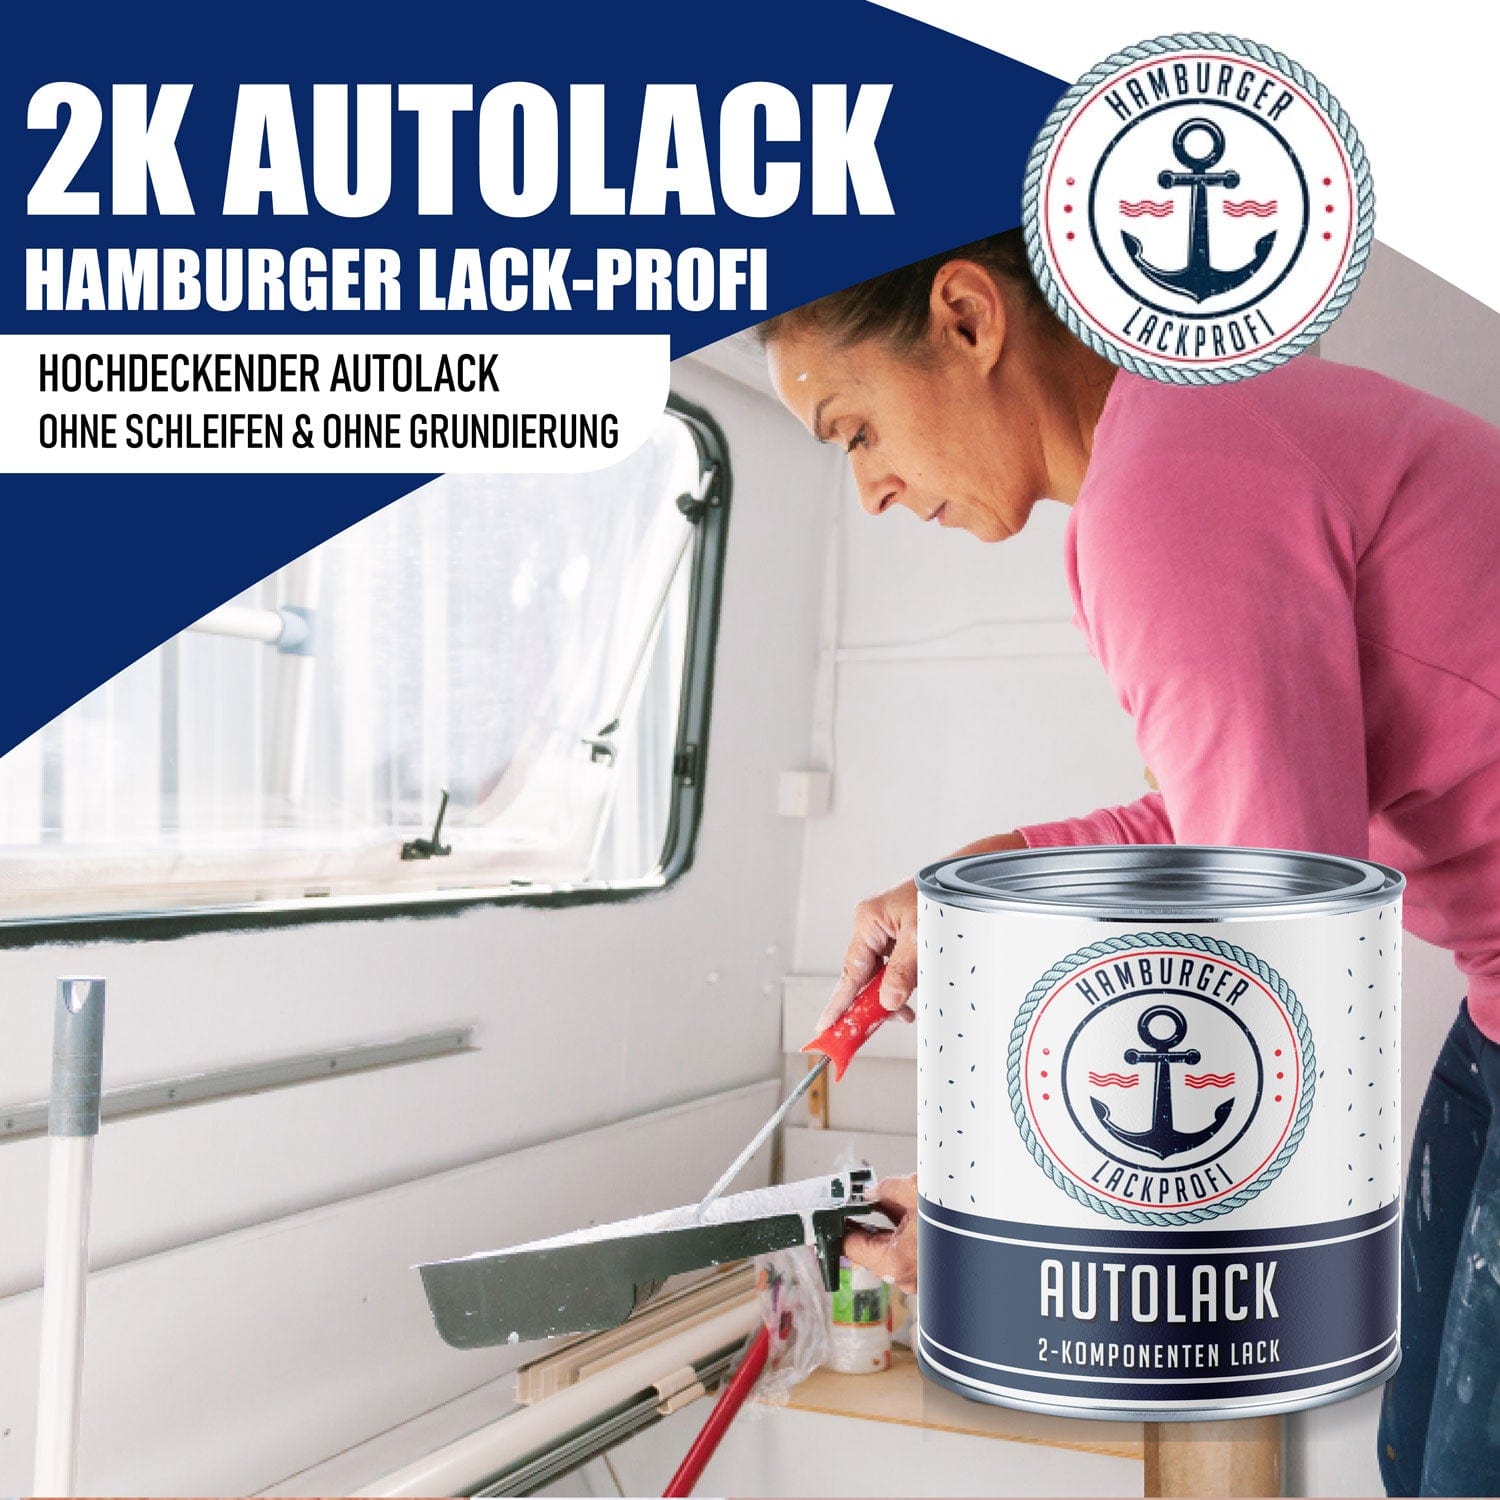 Hamburger Lack-Profi Lacke & Beschichtungen Hamburger Lack-Profi 2K Autolack in Blutorange RAL 2002 mit Lackierset (X300) & Verdünnung (1 L) - 30% Sparangebot